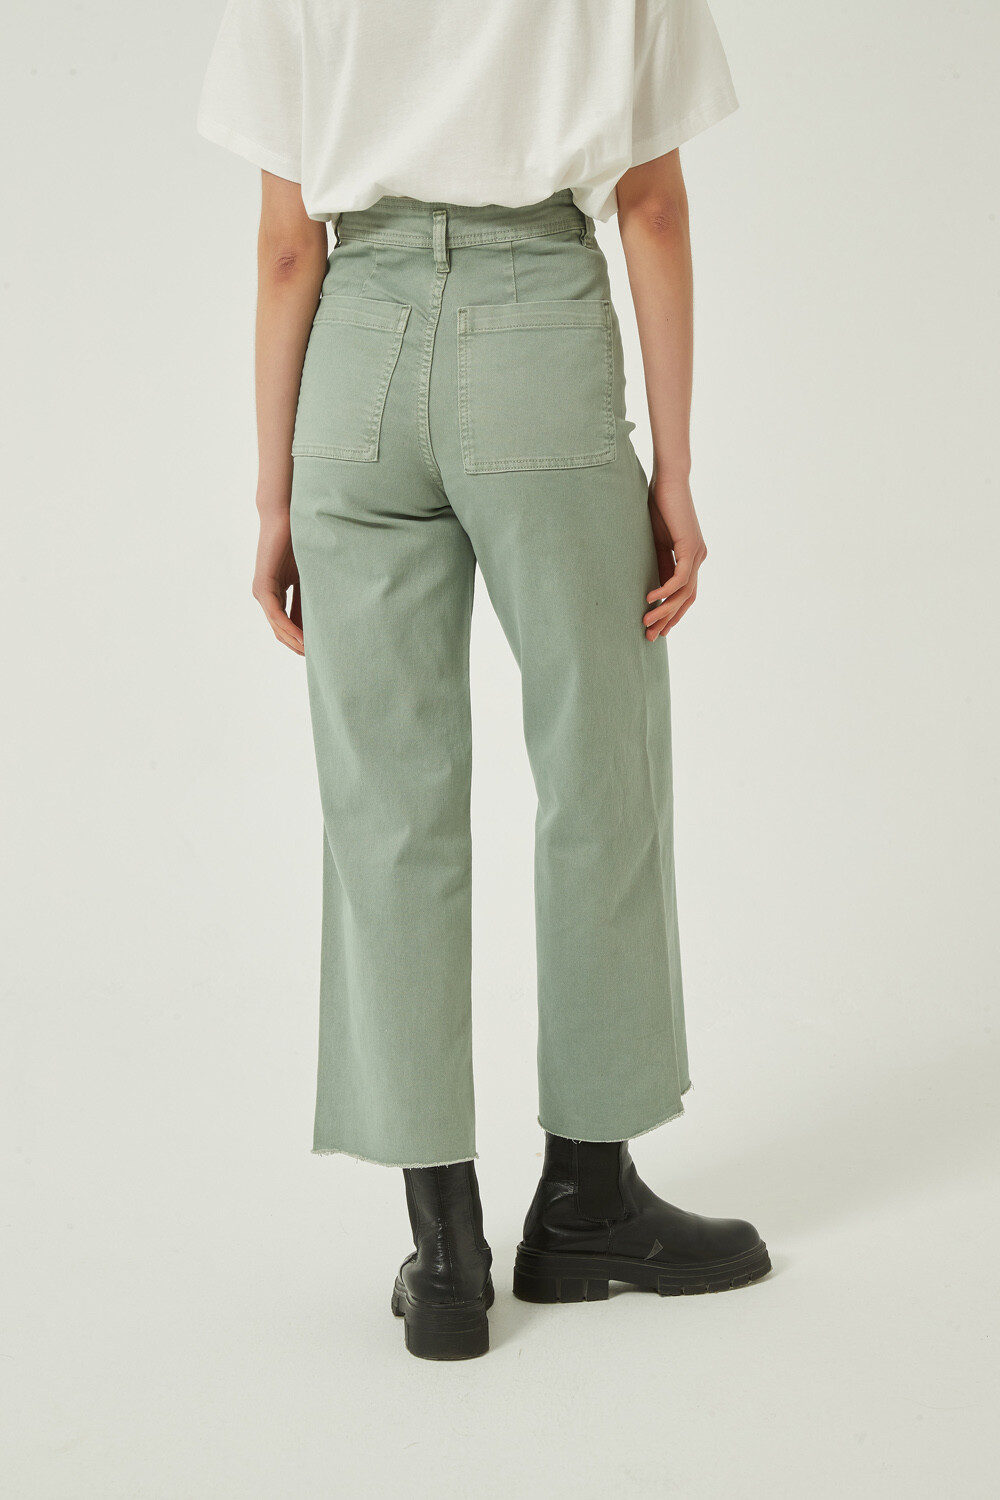 Pantalon Cobdar Verde Grisaceo